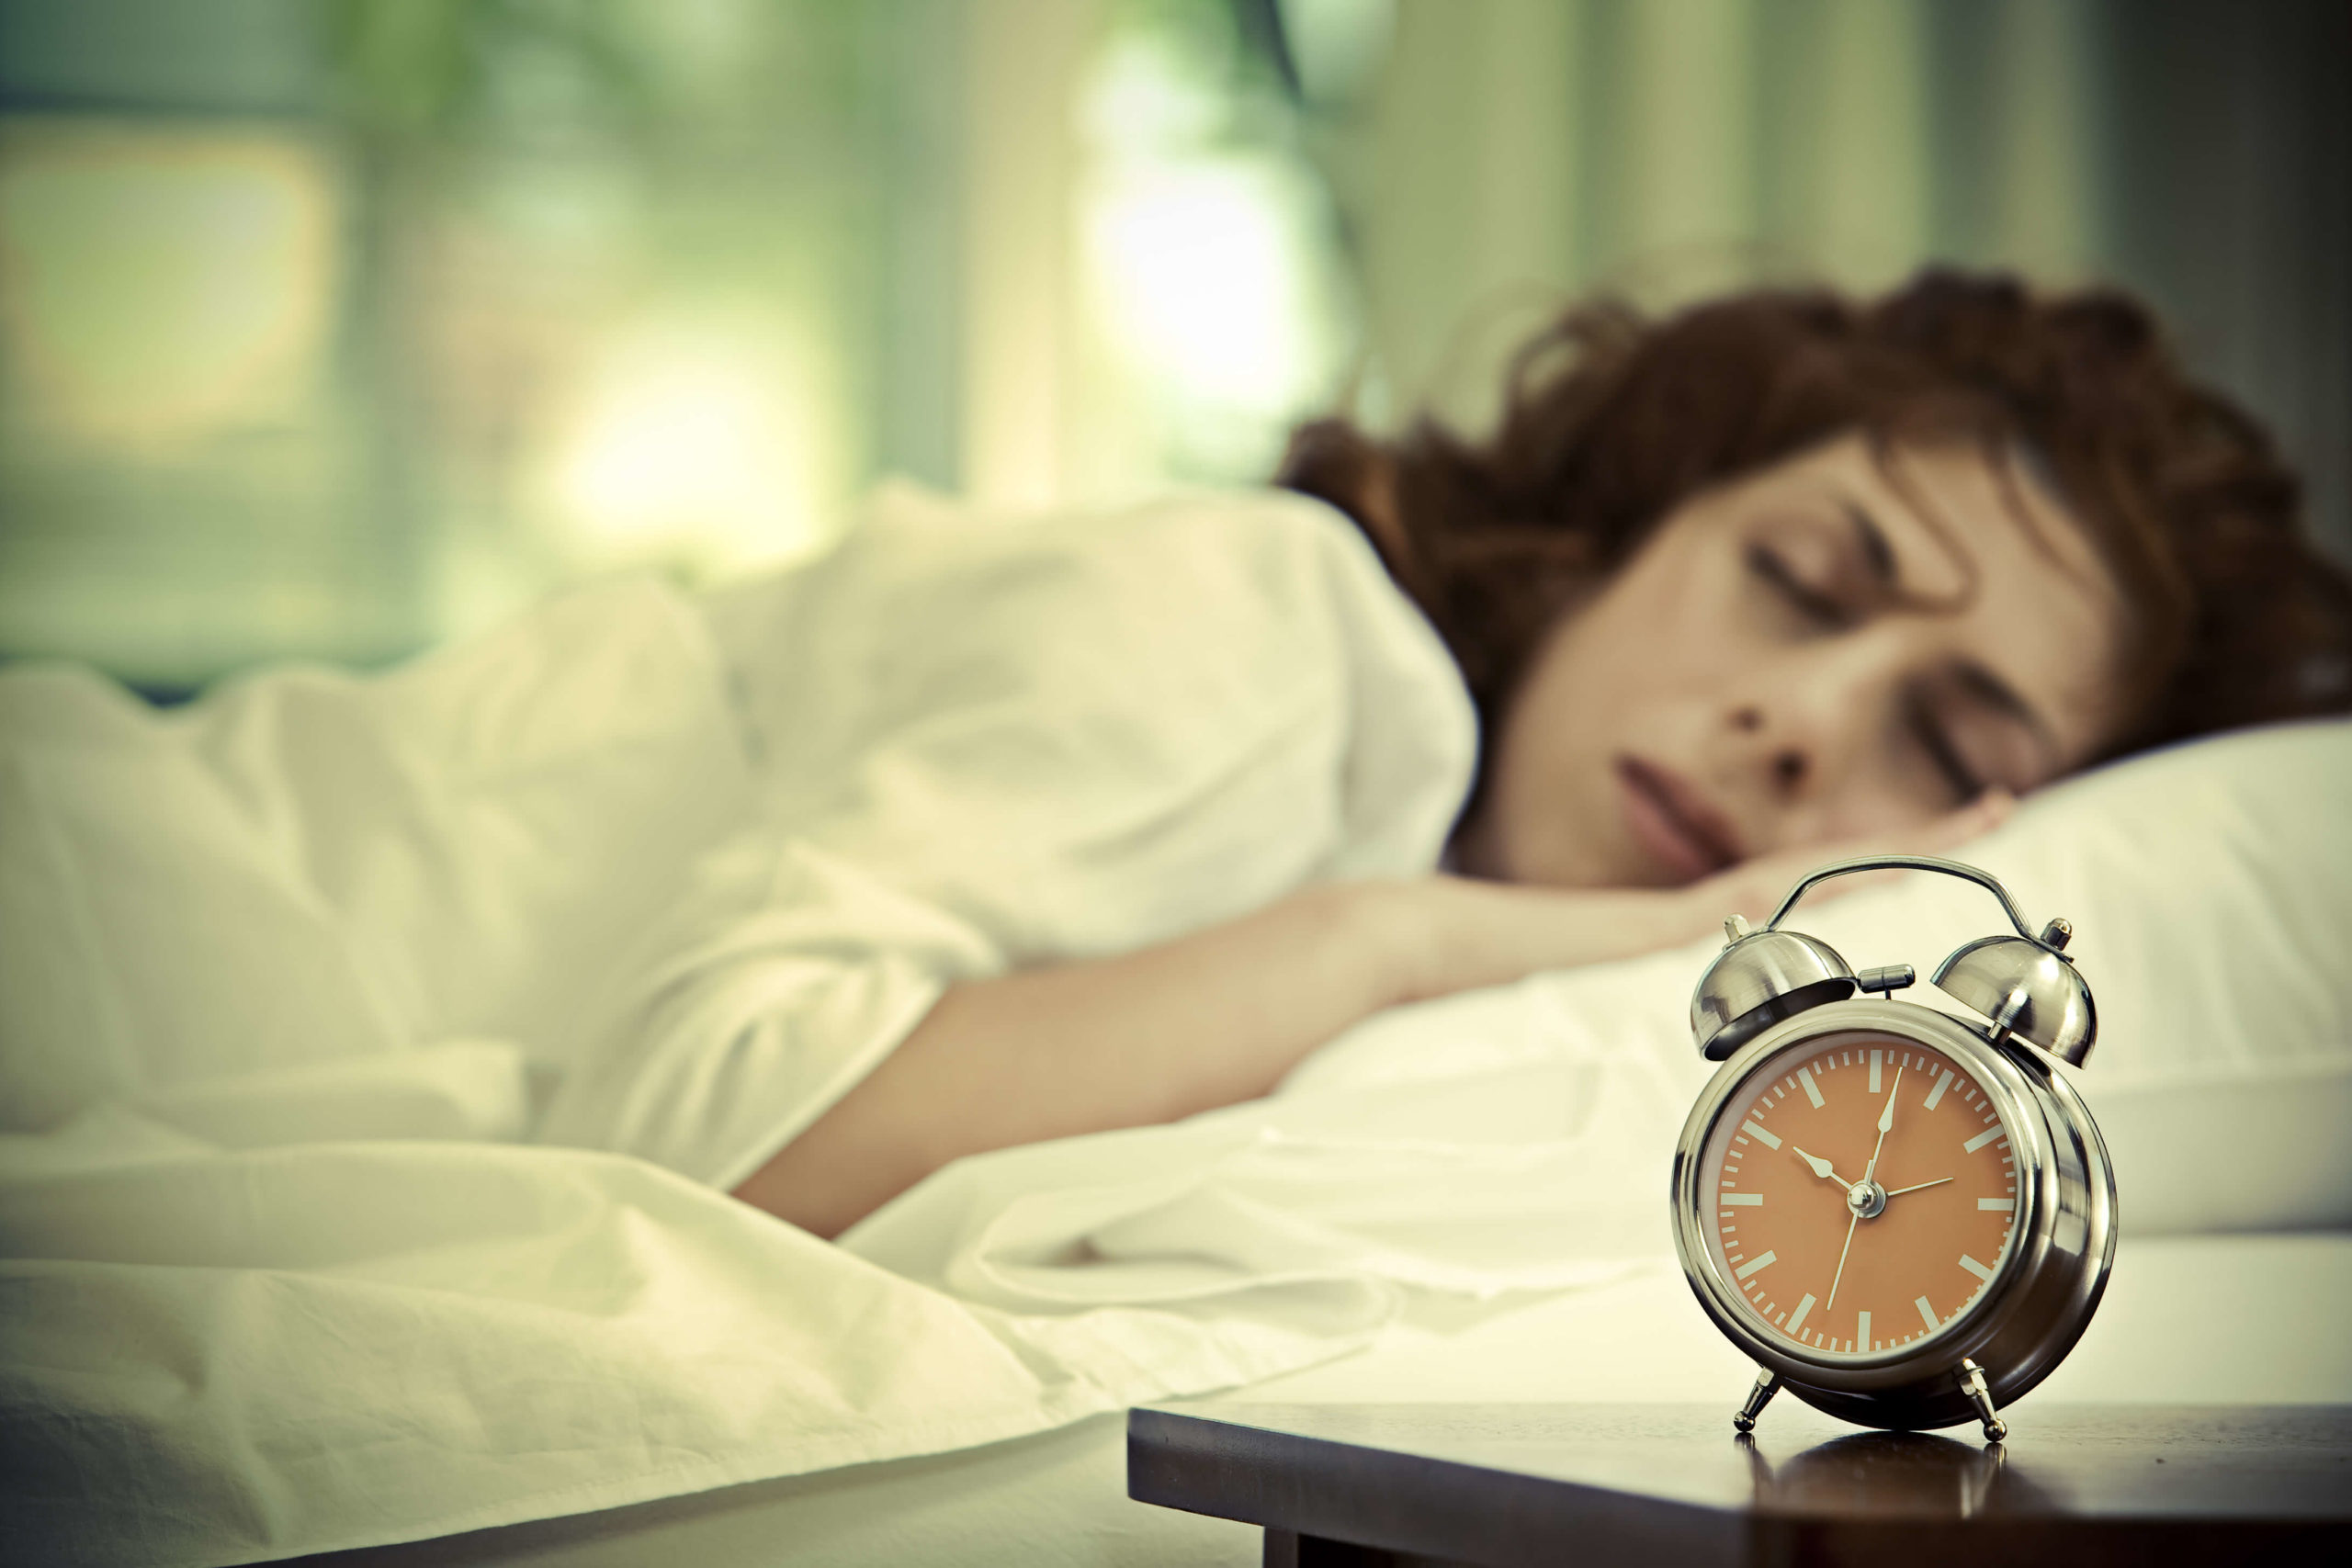 Why sleep matters